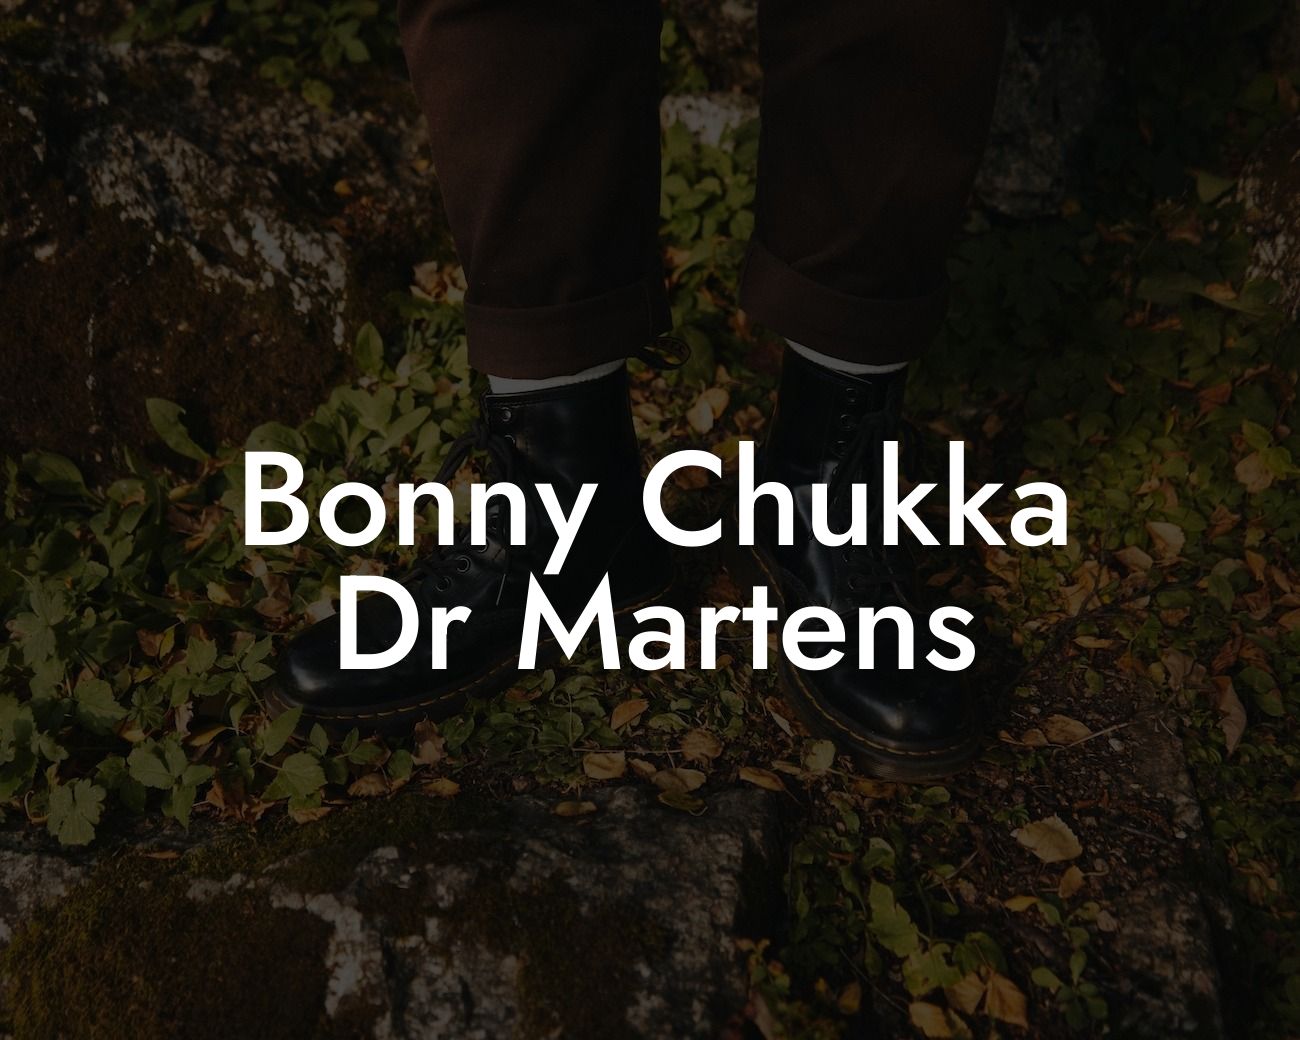 Bonny Chukka Dr Martens